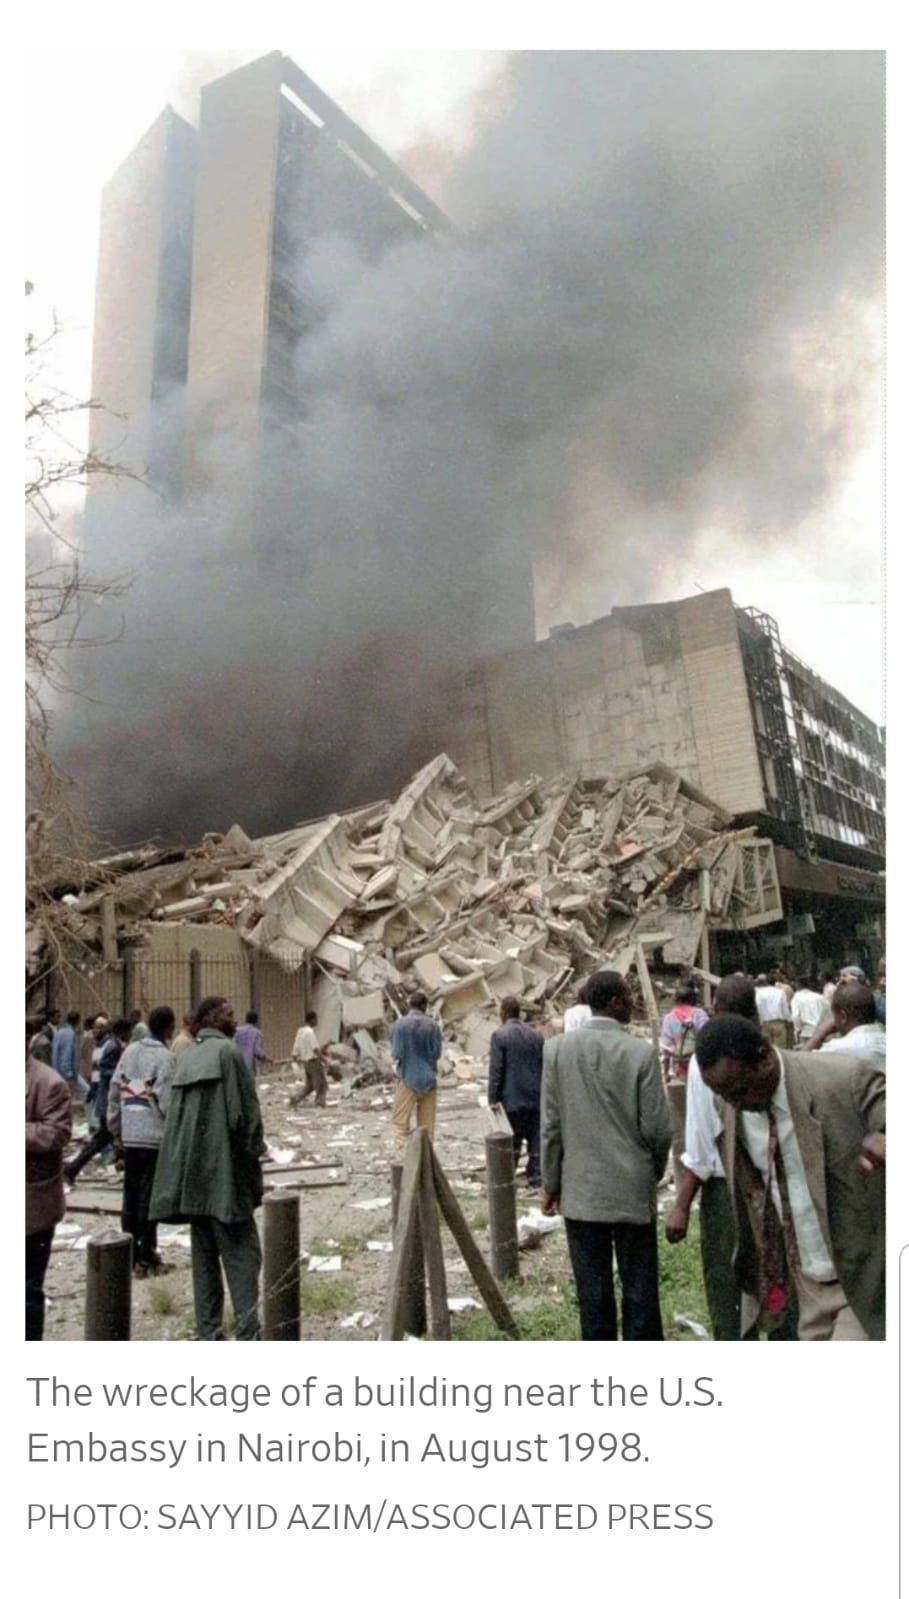 U.S NEARS SETTLEMENT WITH SUDAN OVER 1998 TERROR BOMBINGS